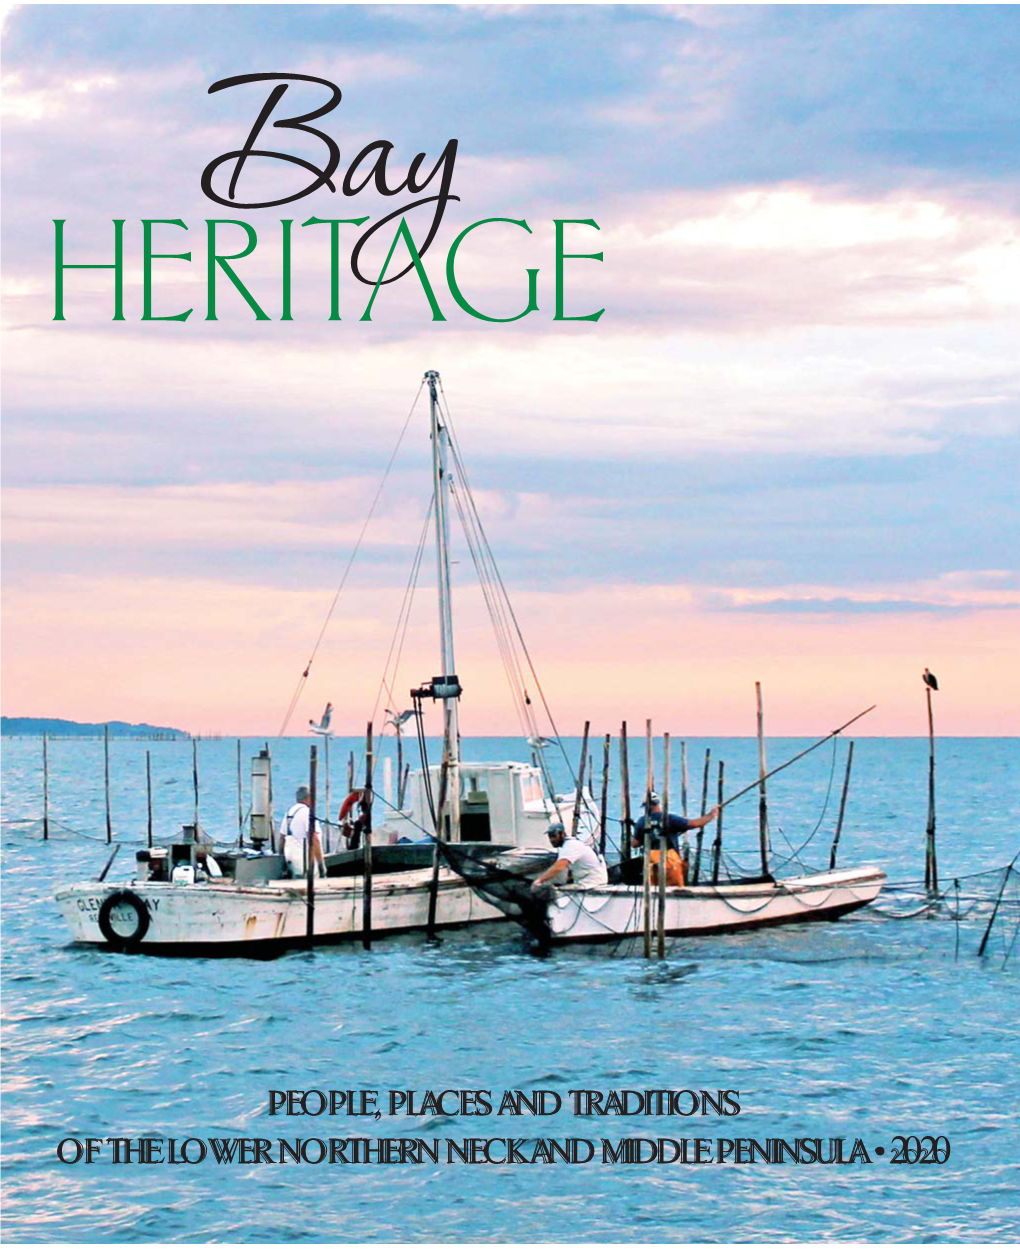 Bay Heritage, Box 400, Kilmarnock,HERITAGE Va